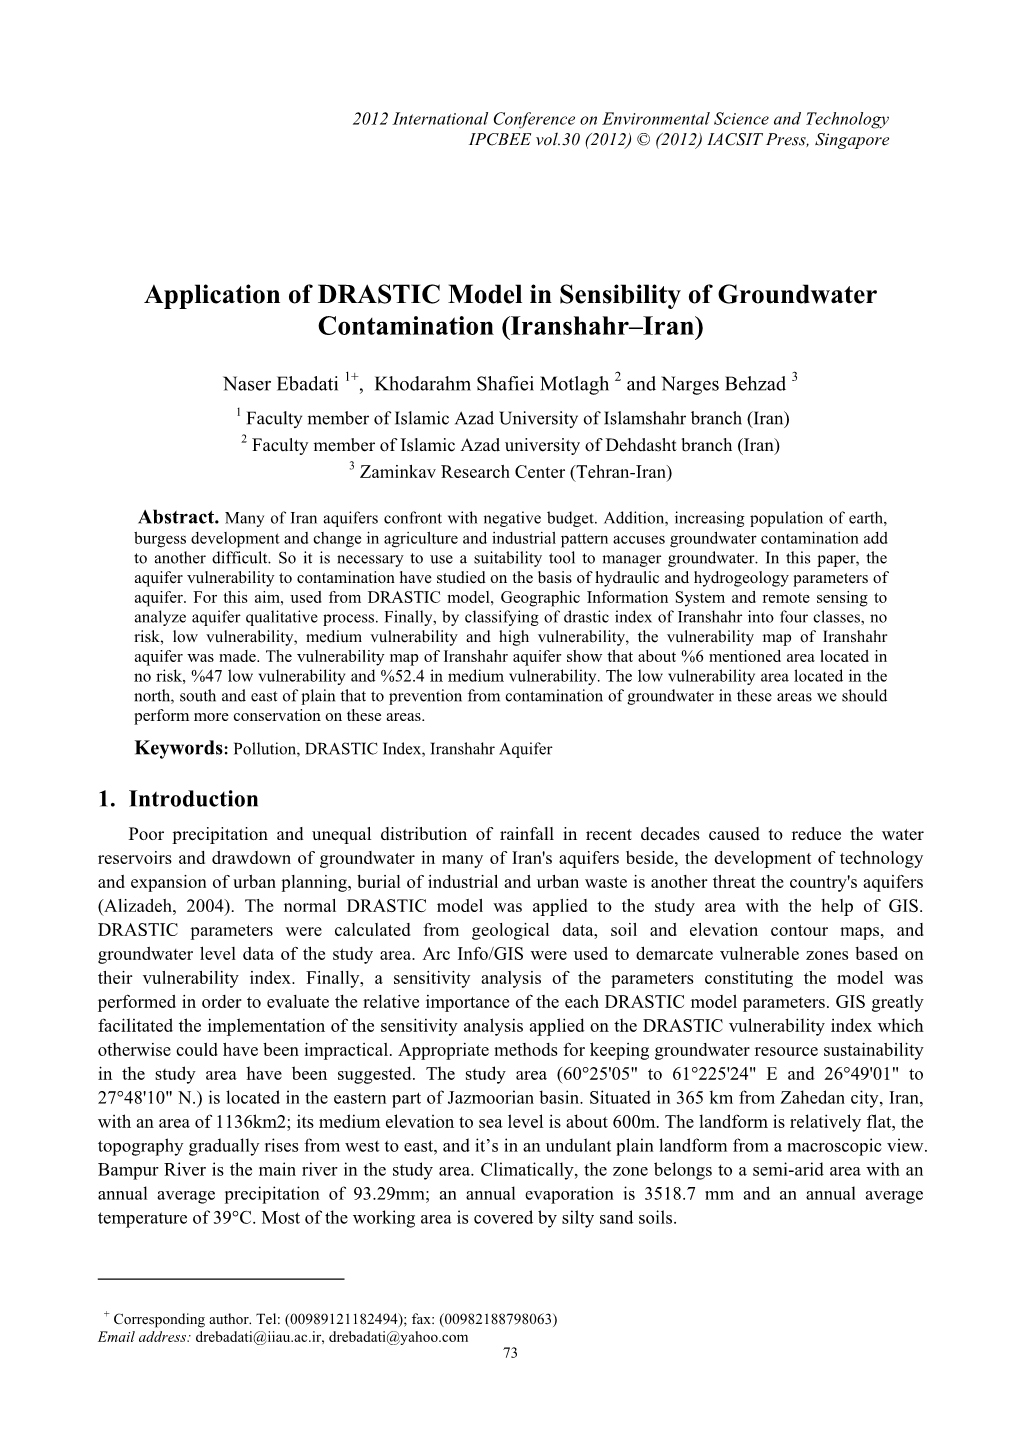 Application of DRASTIC Model in Sensibility of Groundwater Contamination (Iranshahr–Iran)